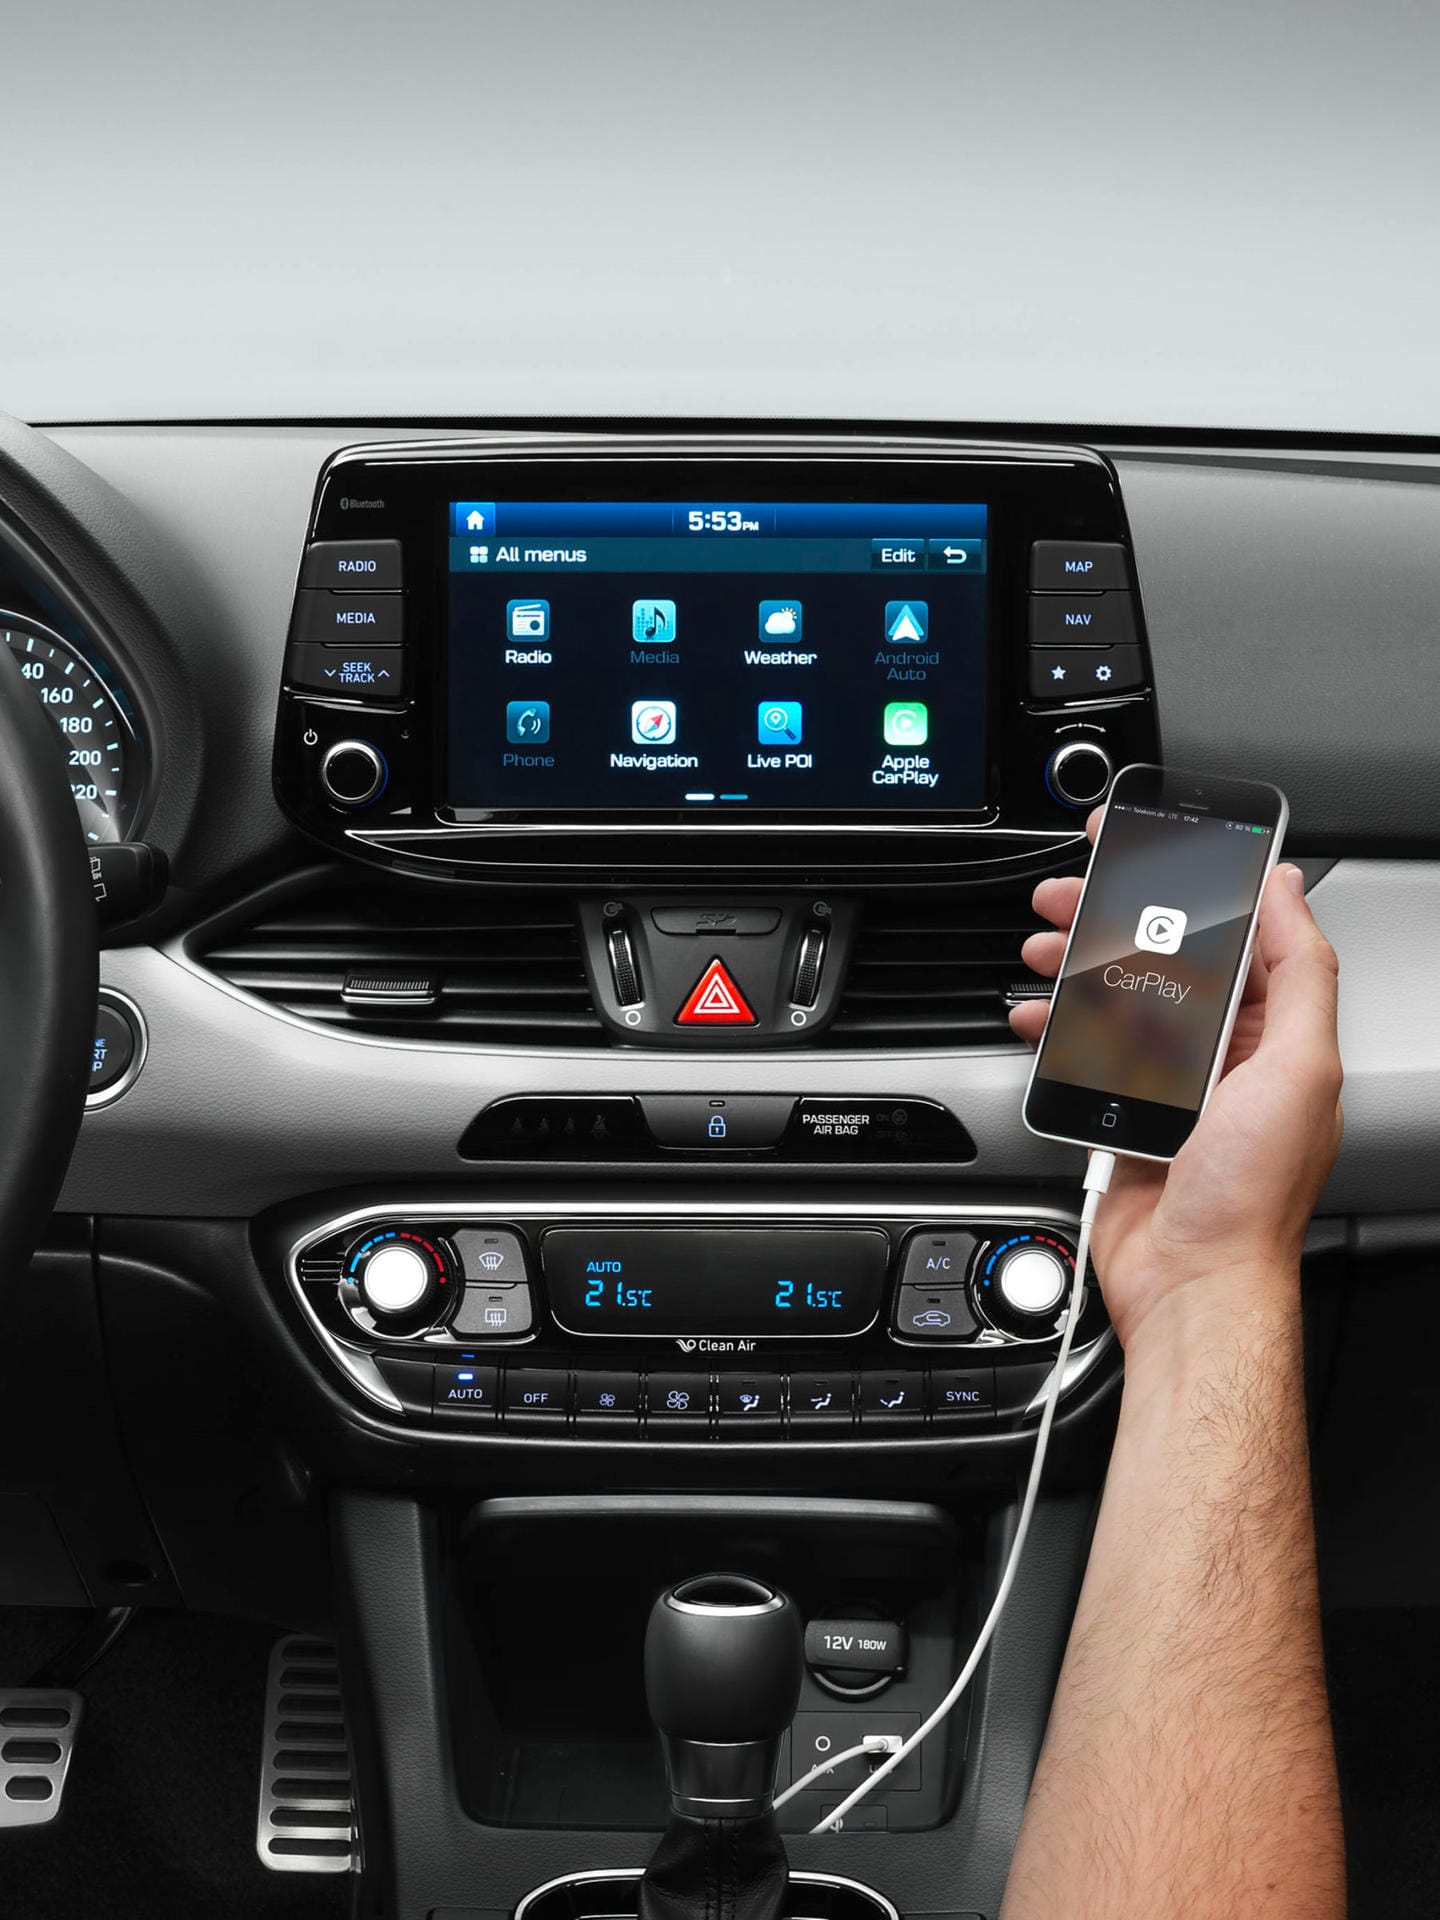 Der 8-Zoll-Touchscreen des optionalen Navigationssystems integriert verschiedene Navigations-, Media- und Connectivity-Funktionen.